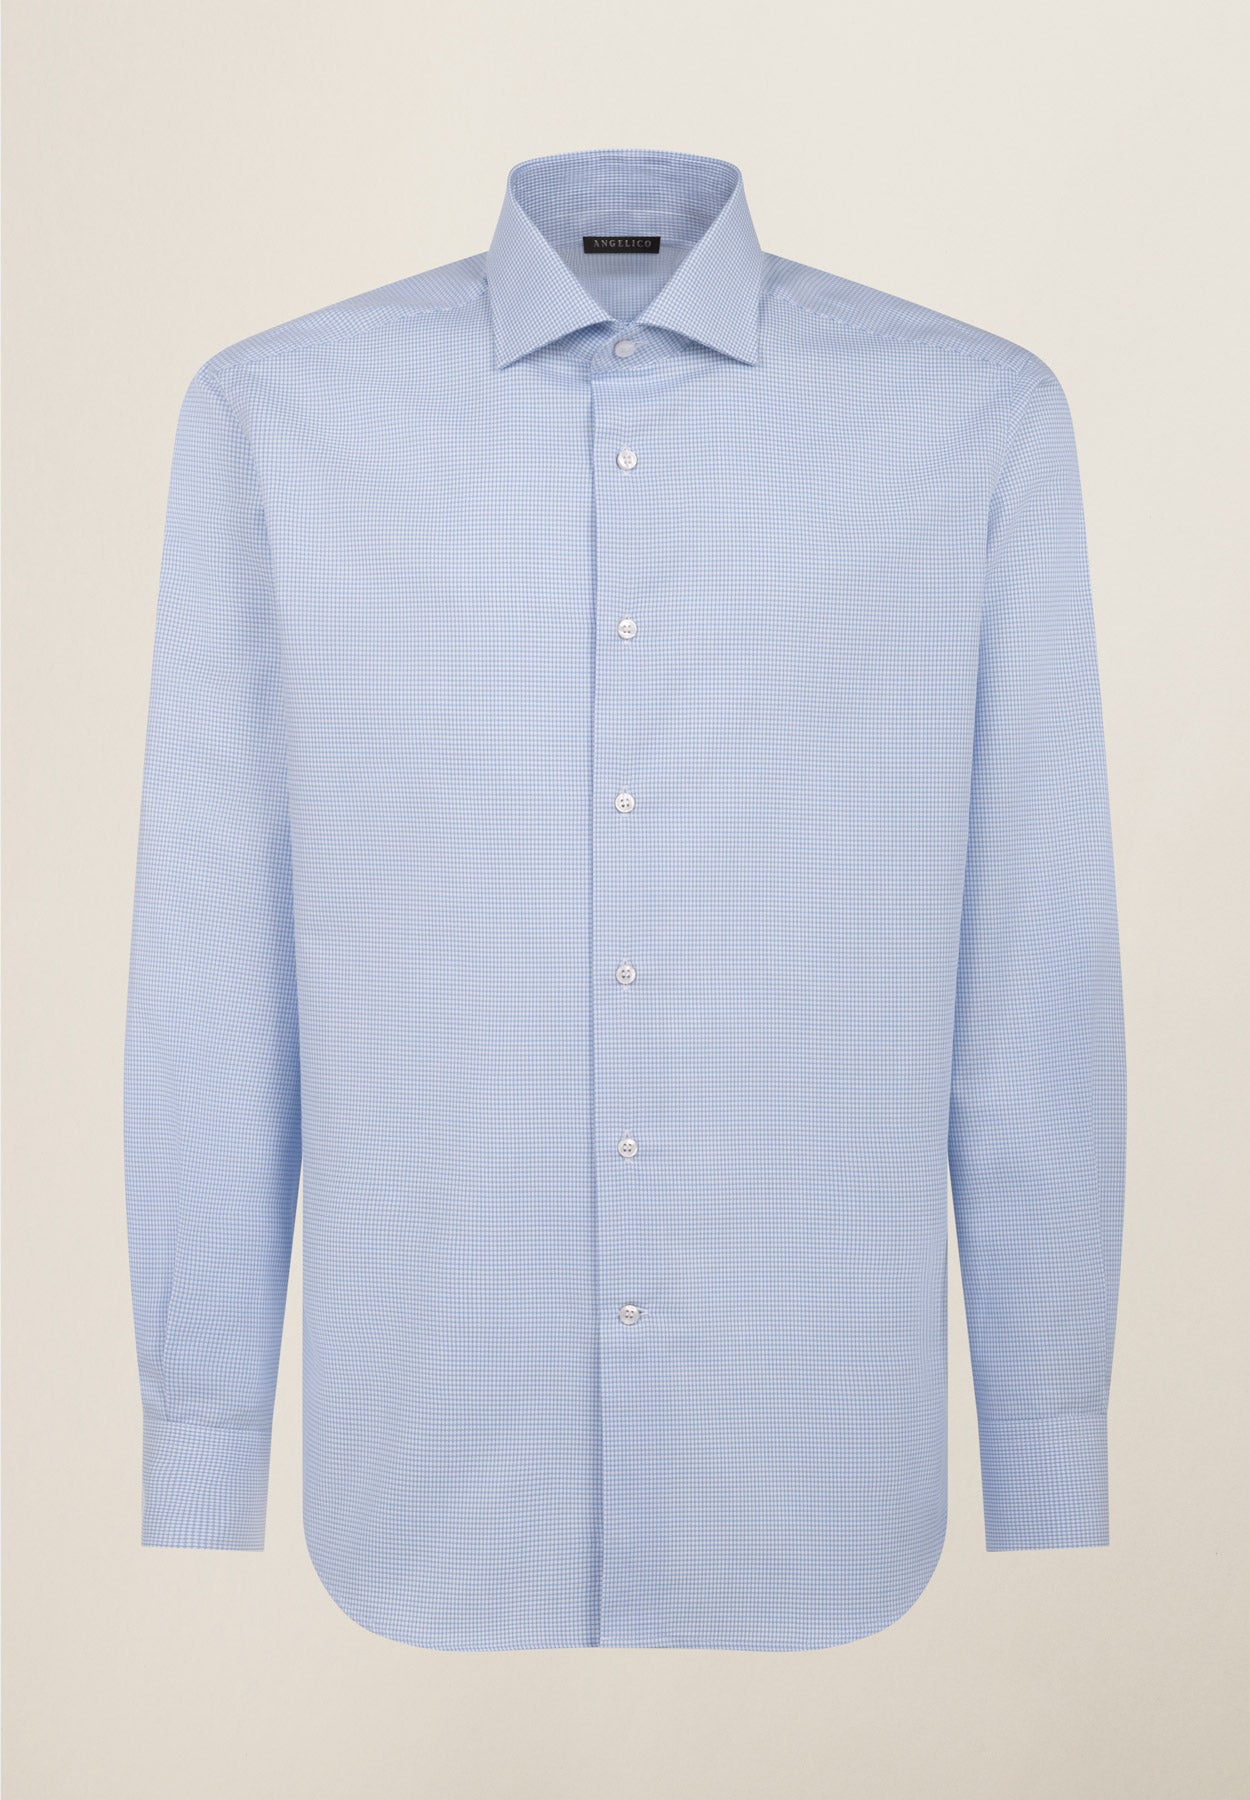 Light blue shirt check check cotton comfort fit